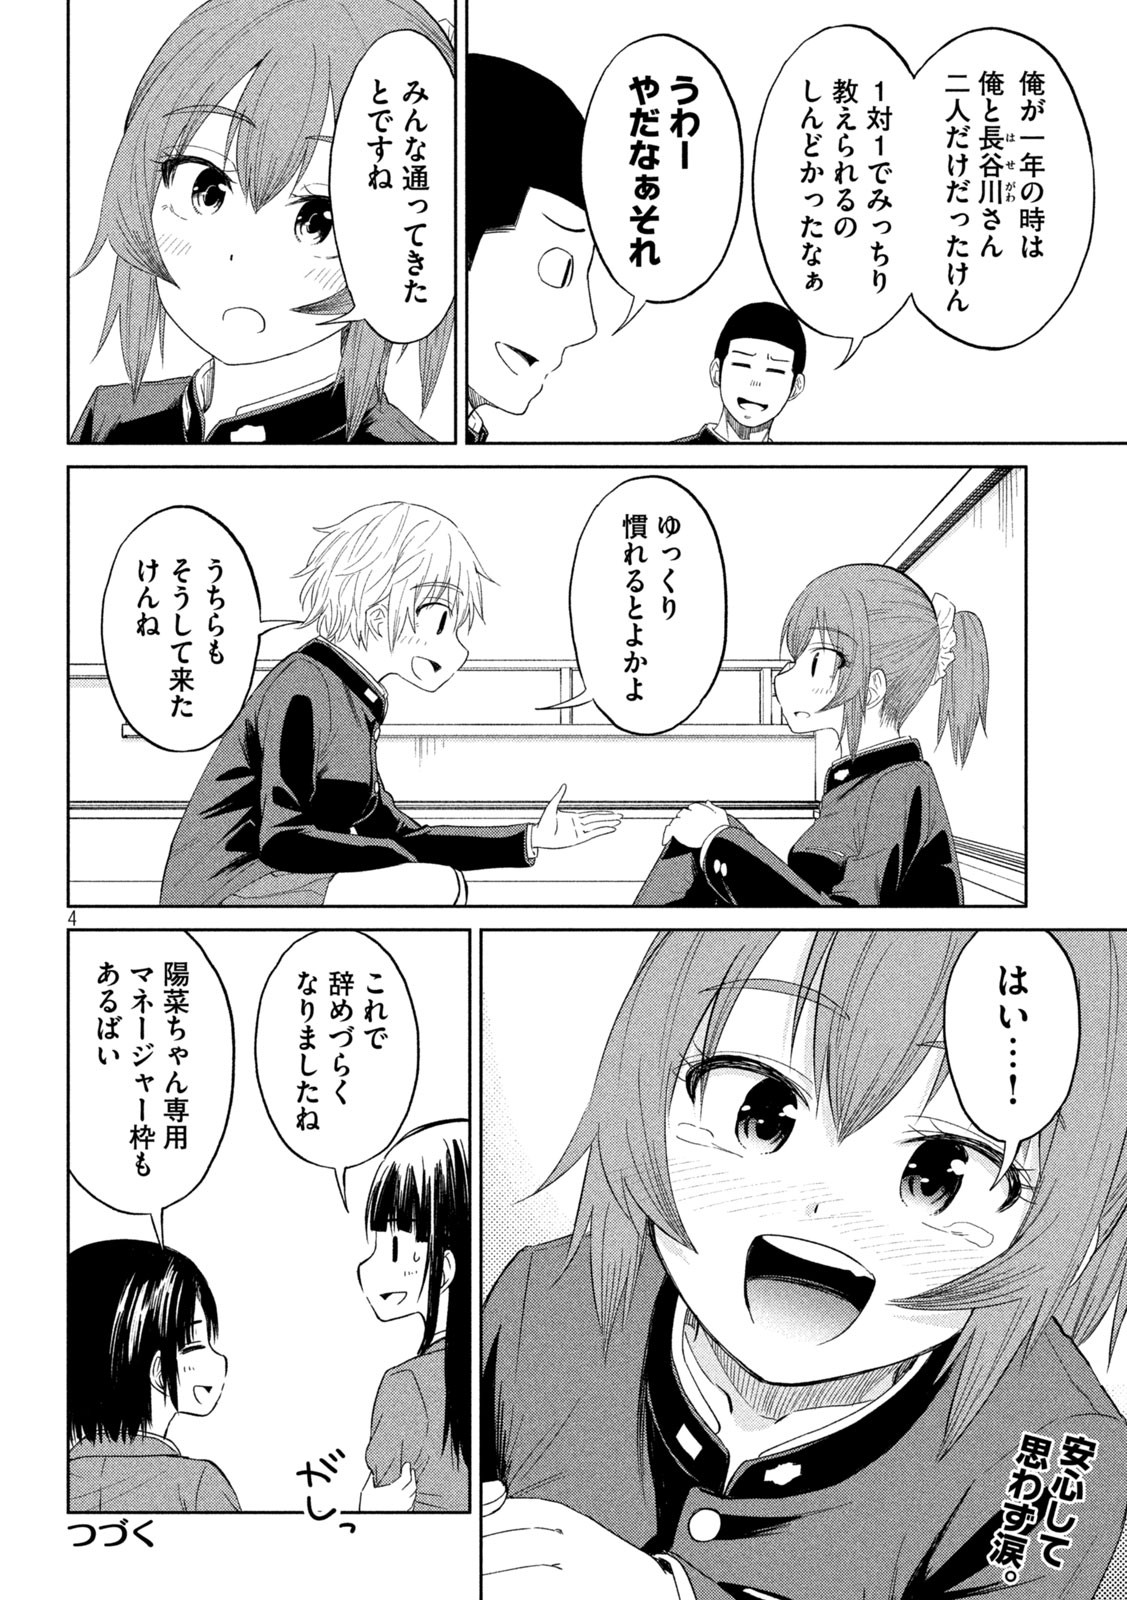 Koharu haru! - Chapter 97 - Page 4